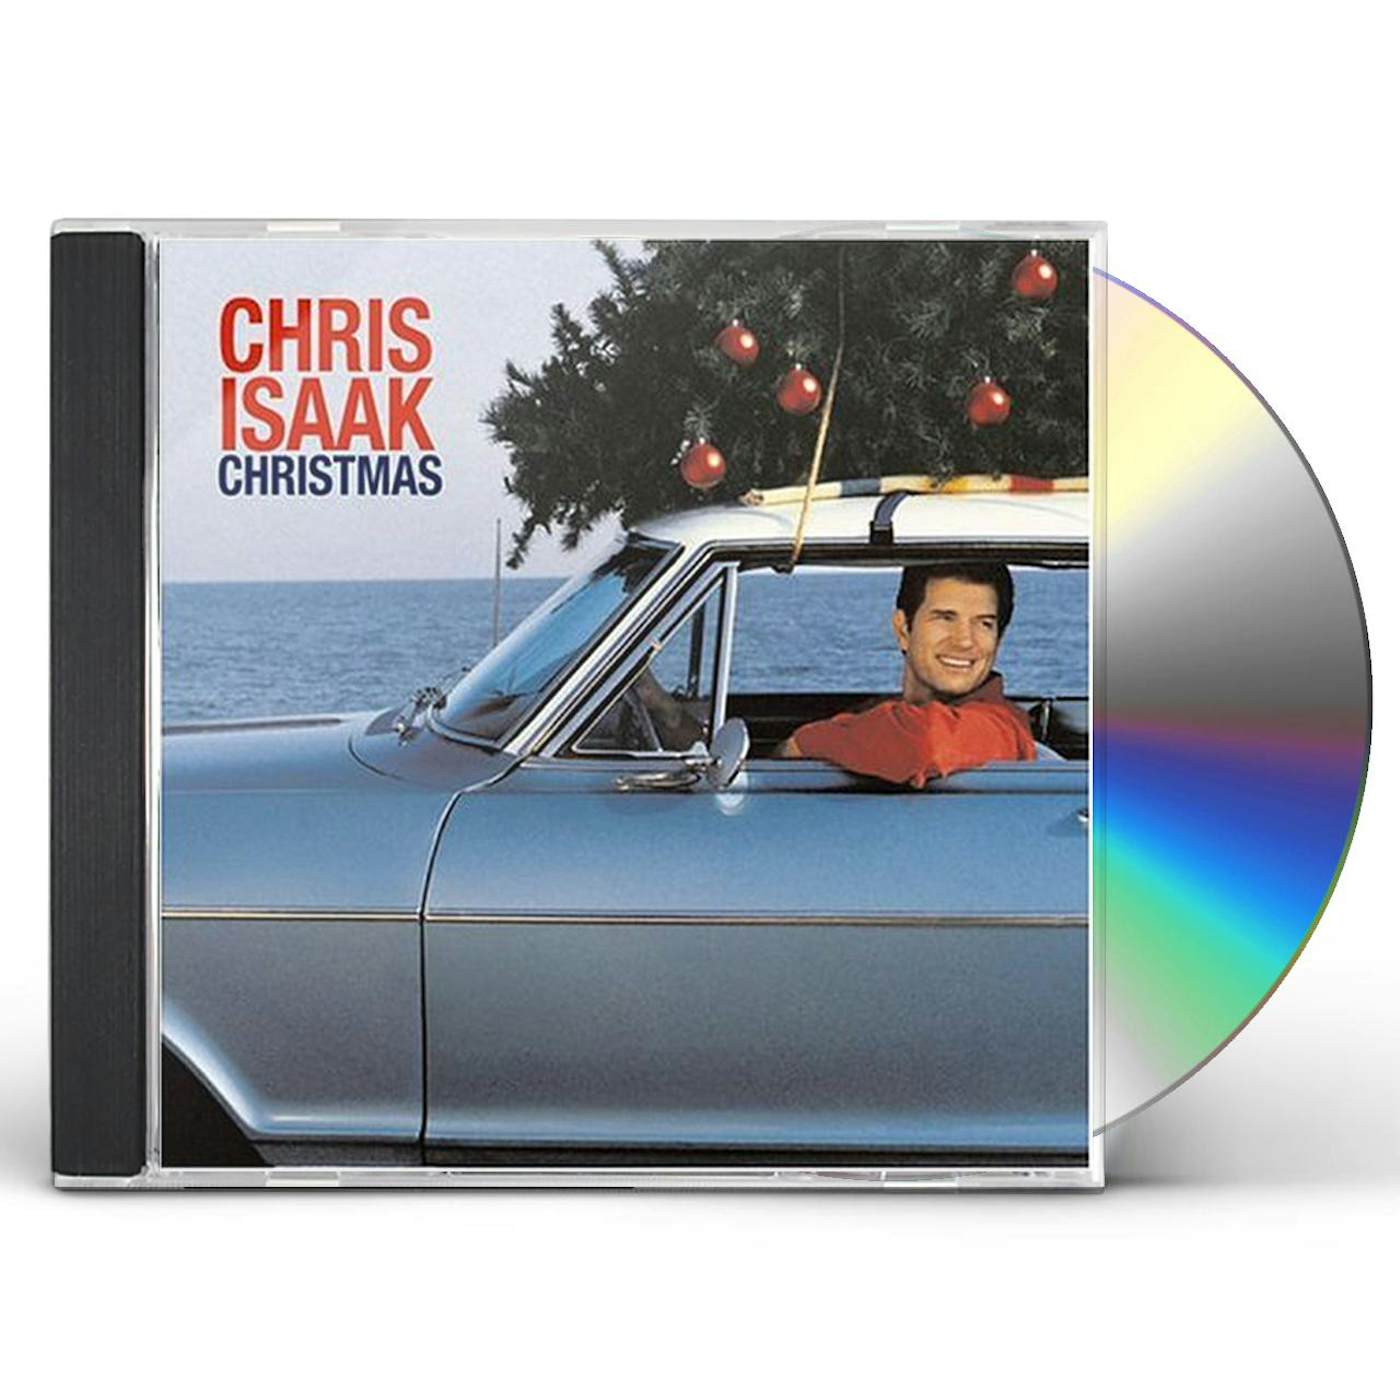 CHRIS ISAAK CHRISTMAS CD